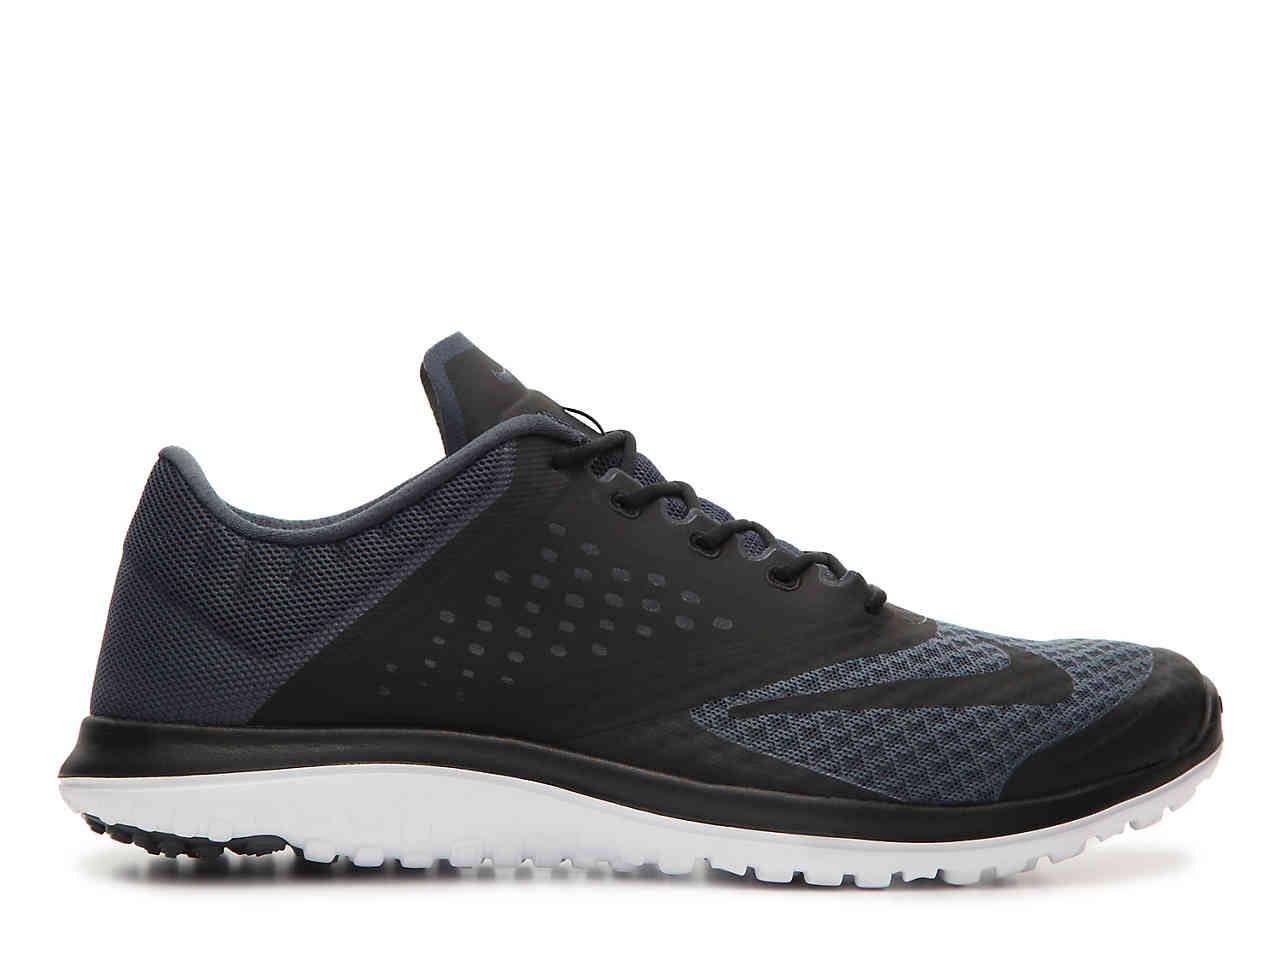 Nike Synthetic Fs Lite Run 2 Lightweight Running Shoe in Black/Grey ...